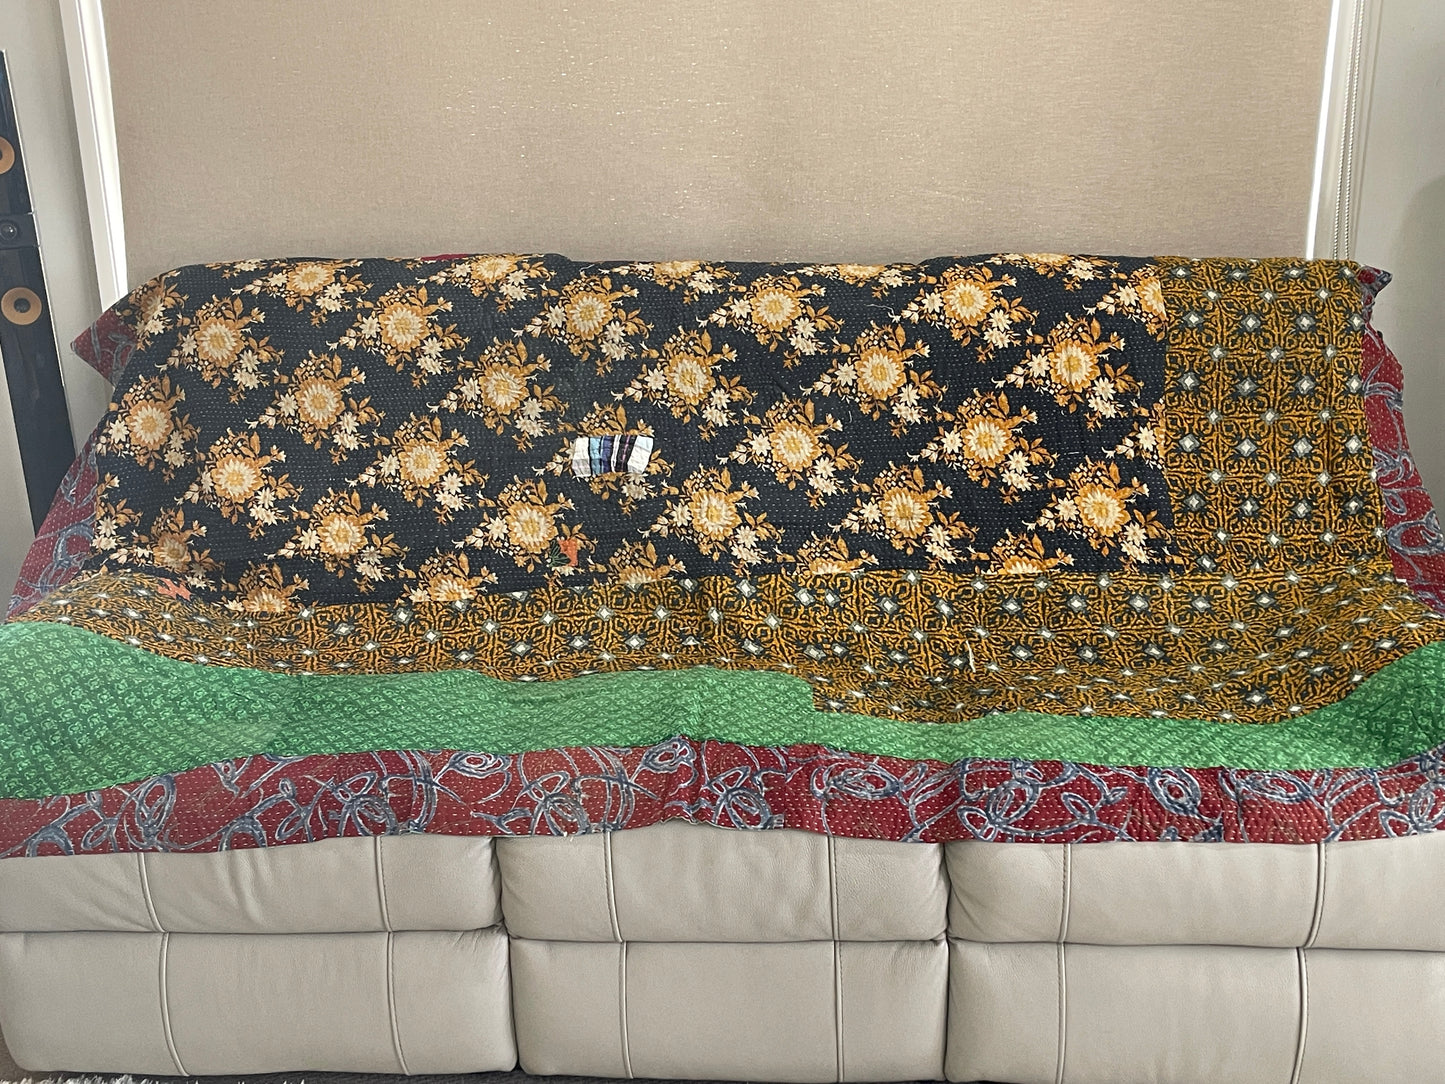 Indian Handmade Vintage Cotton Reversible Kantha Quilt Throw Bedspread - Seema